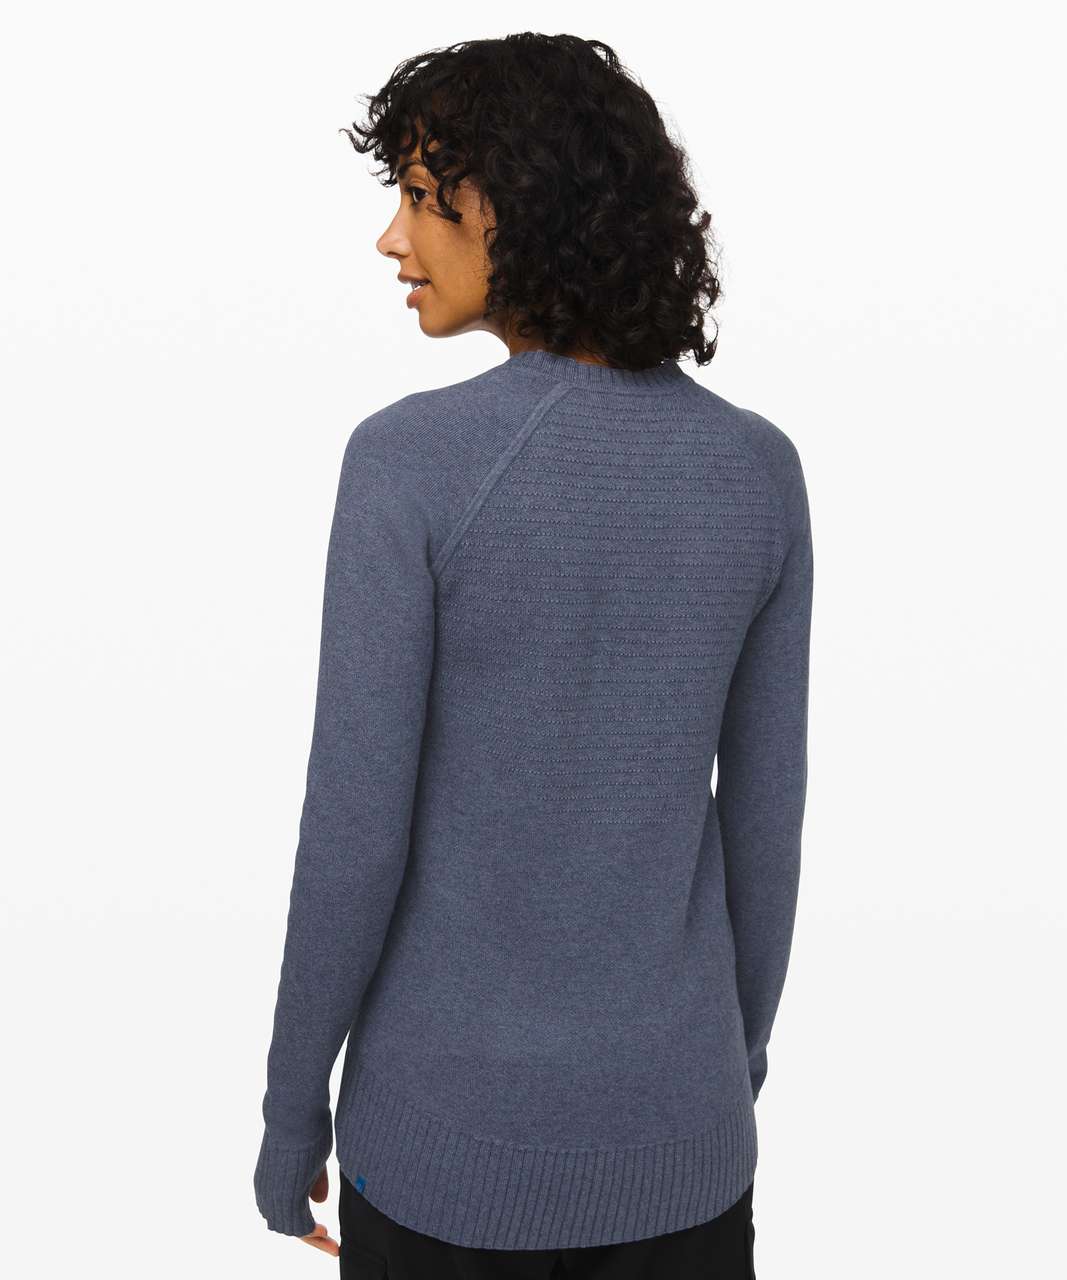 Lululemon Still Lotus Sweater *Reversible - Heathered Code Blue / Heathered Ice Cap / Heathered Code Blue